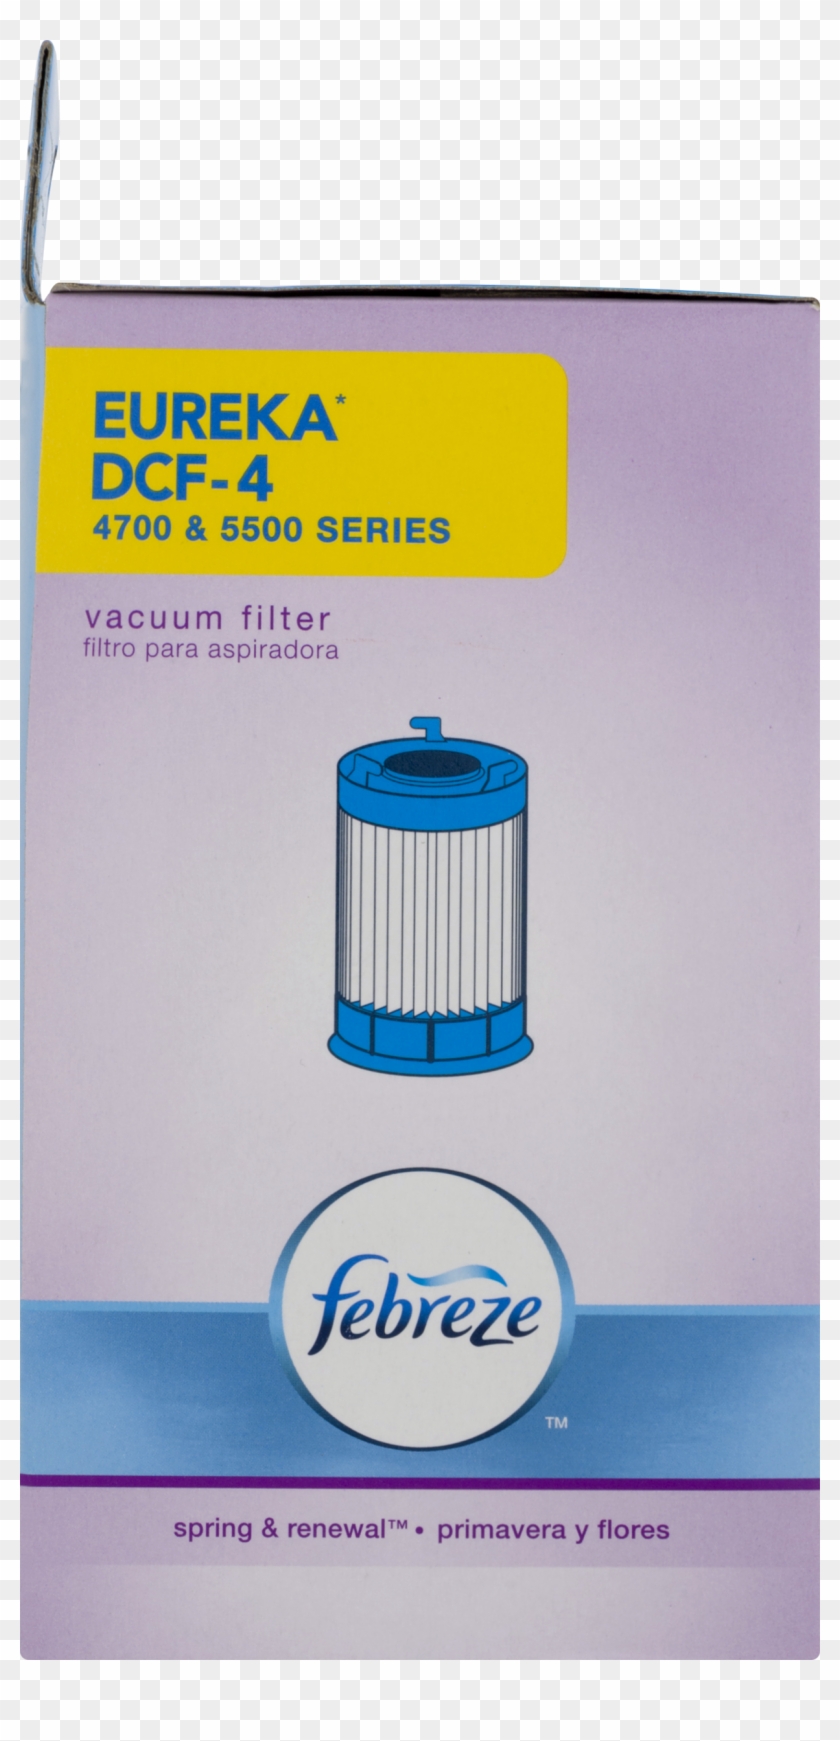 Febreze Vacuum Filter For Eureka Dcf-4 4700 & 5500 - Cylinder Clipart #5423772